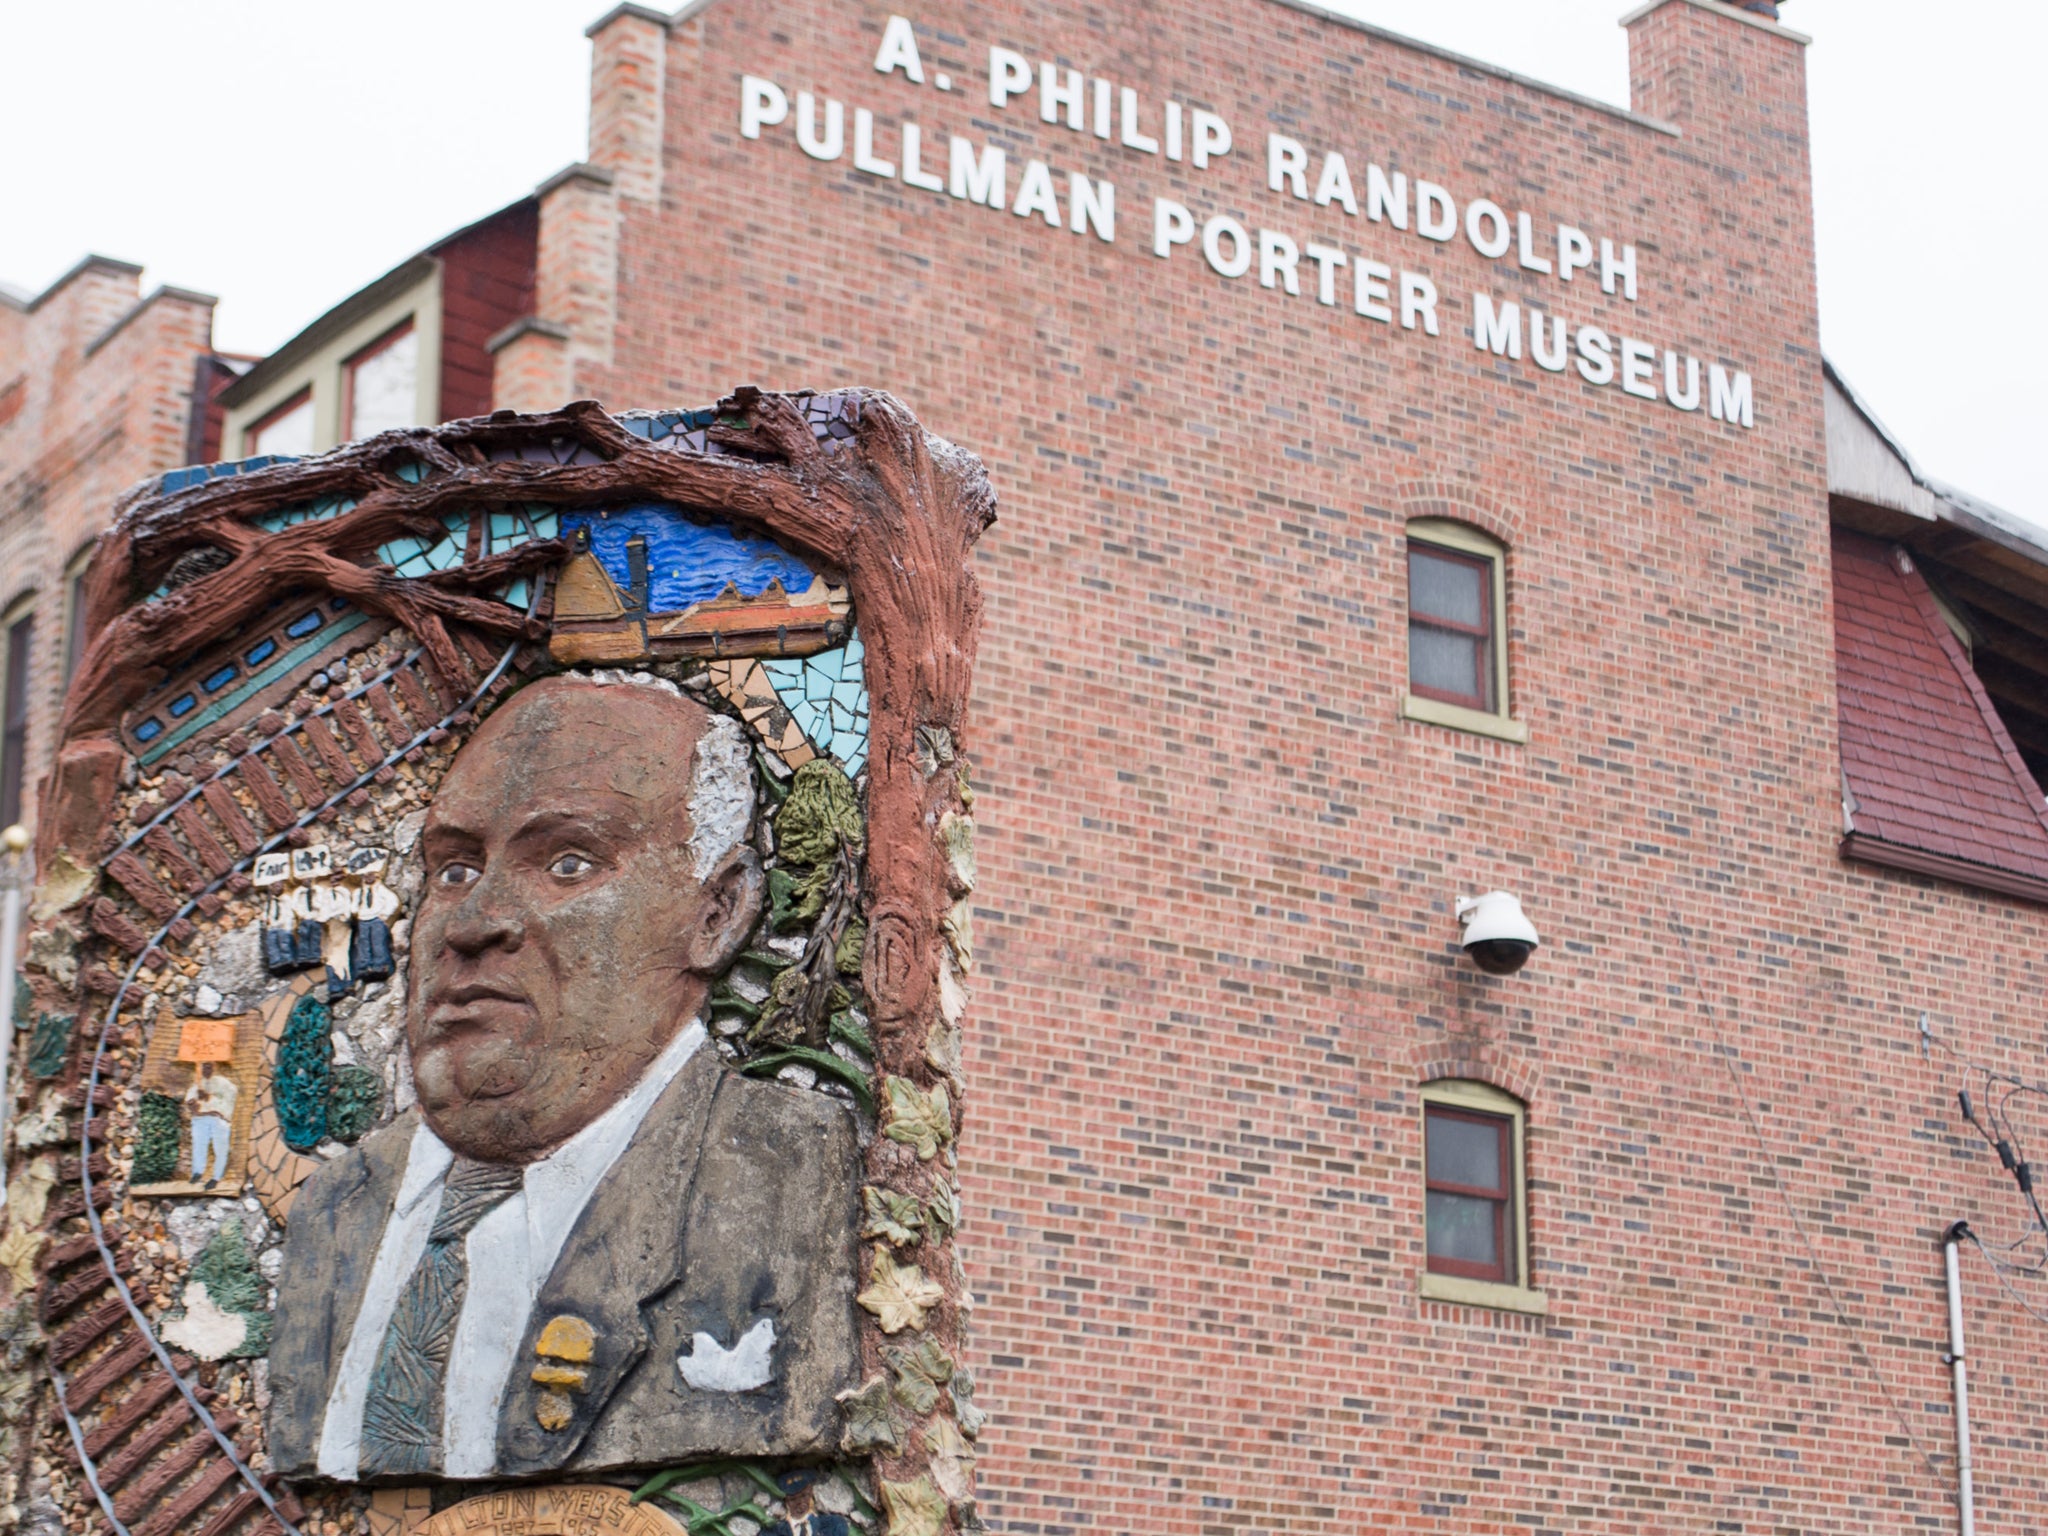 Pullman Porter Museum